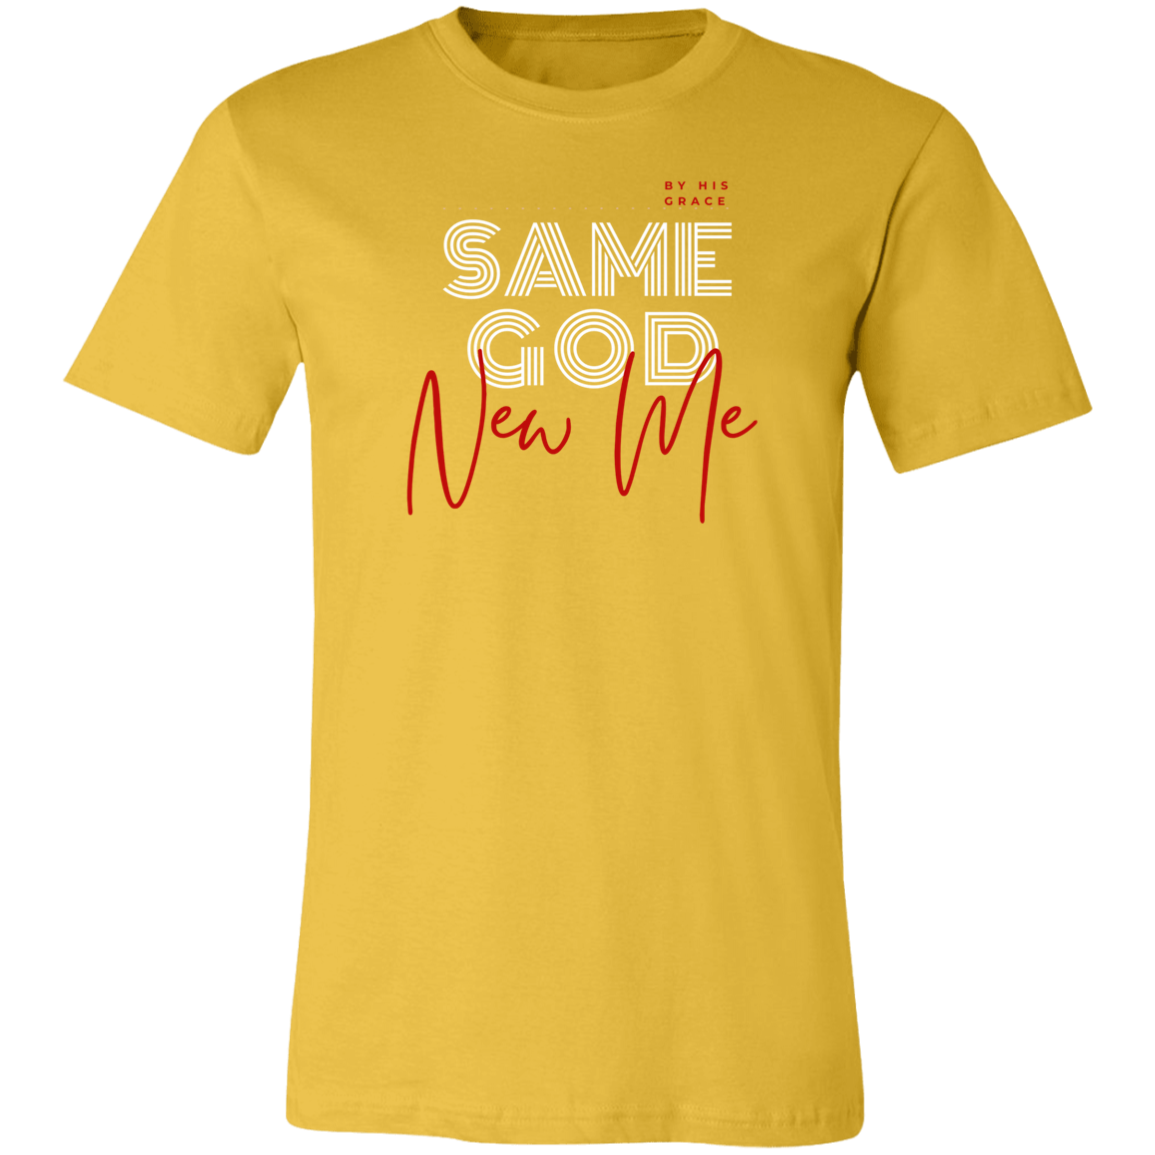 Same God Women's T-Shirt